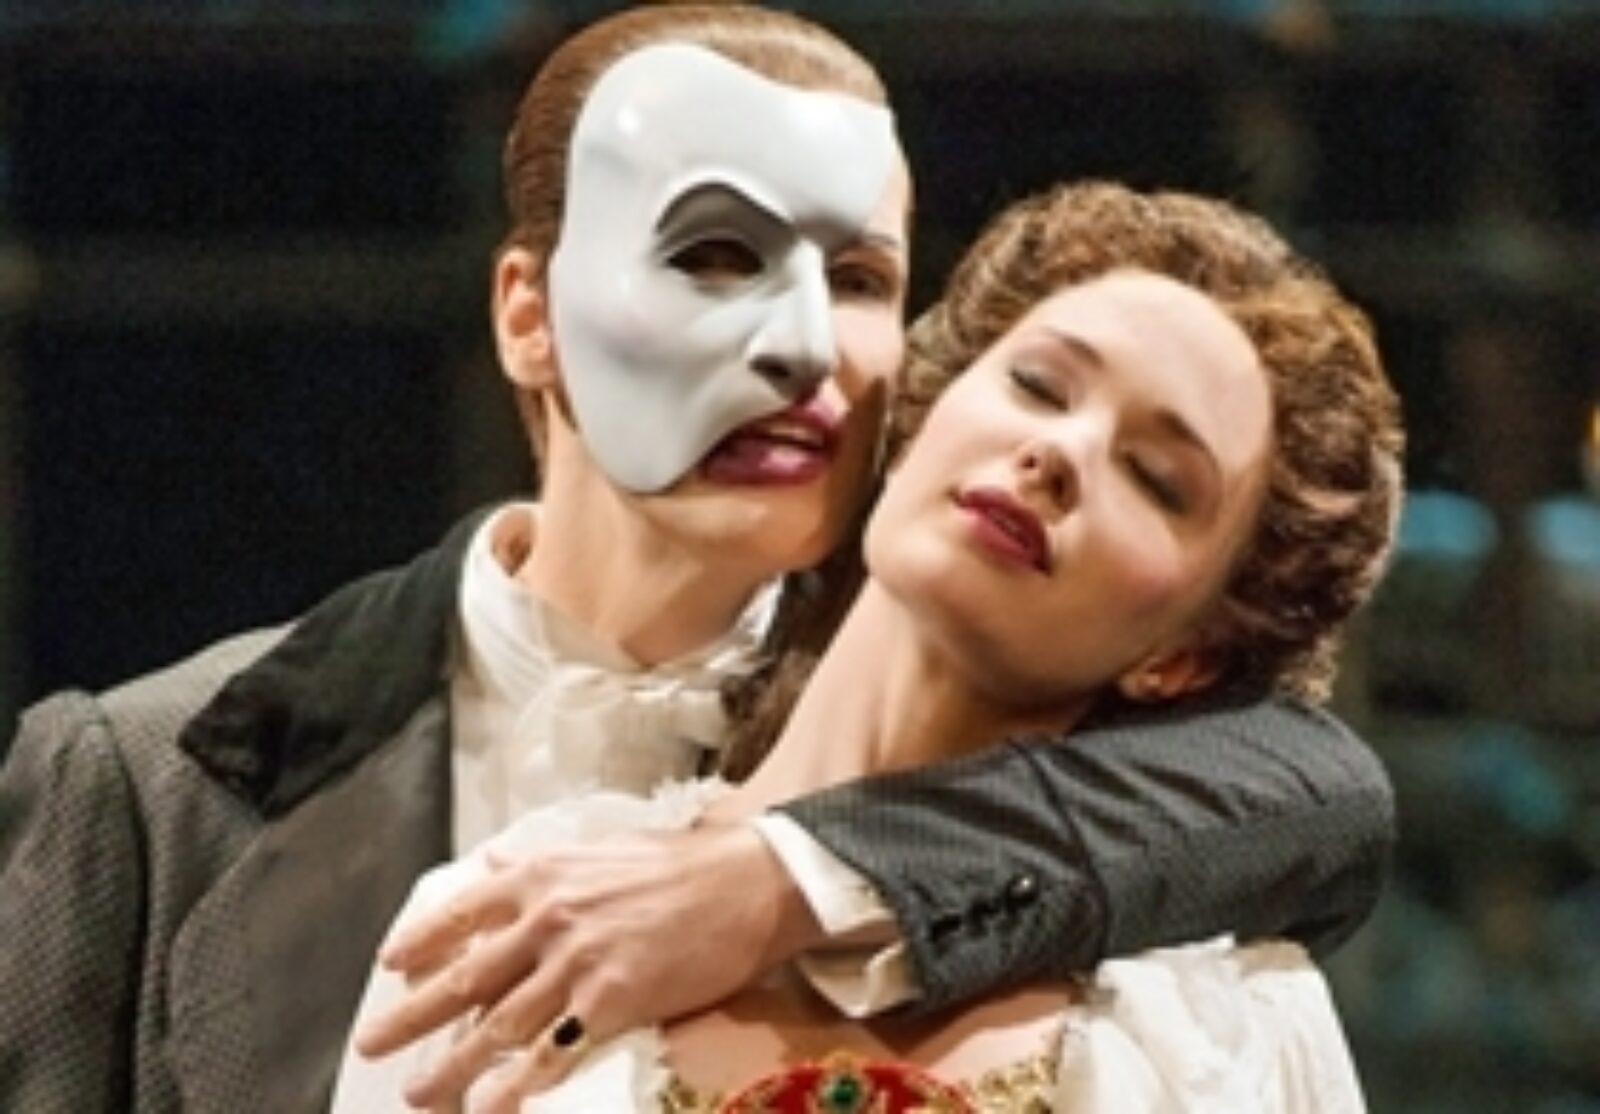 phantom of the opera cast new york